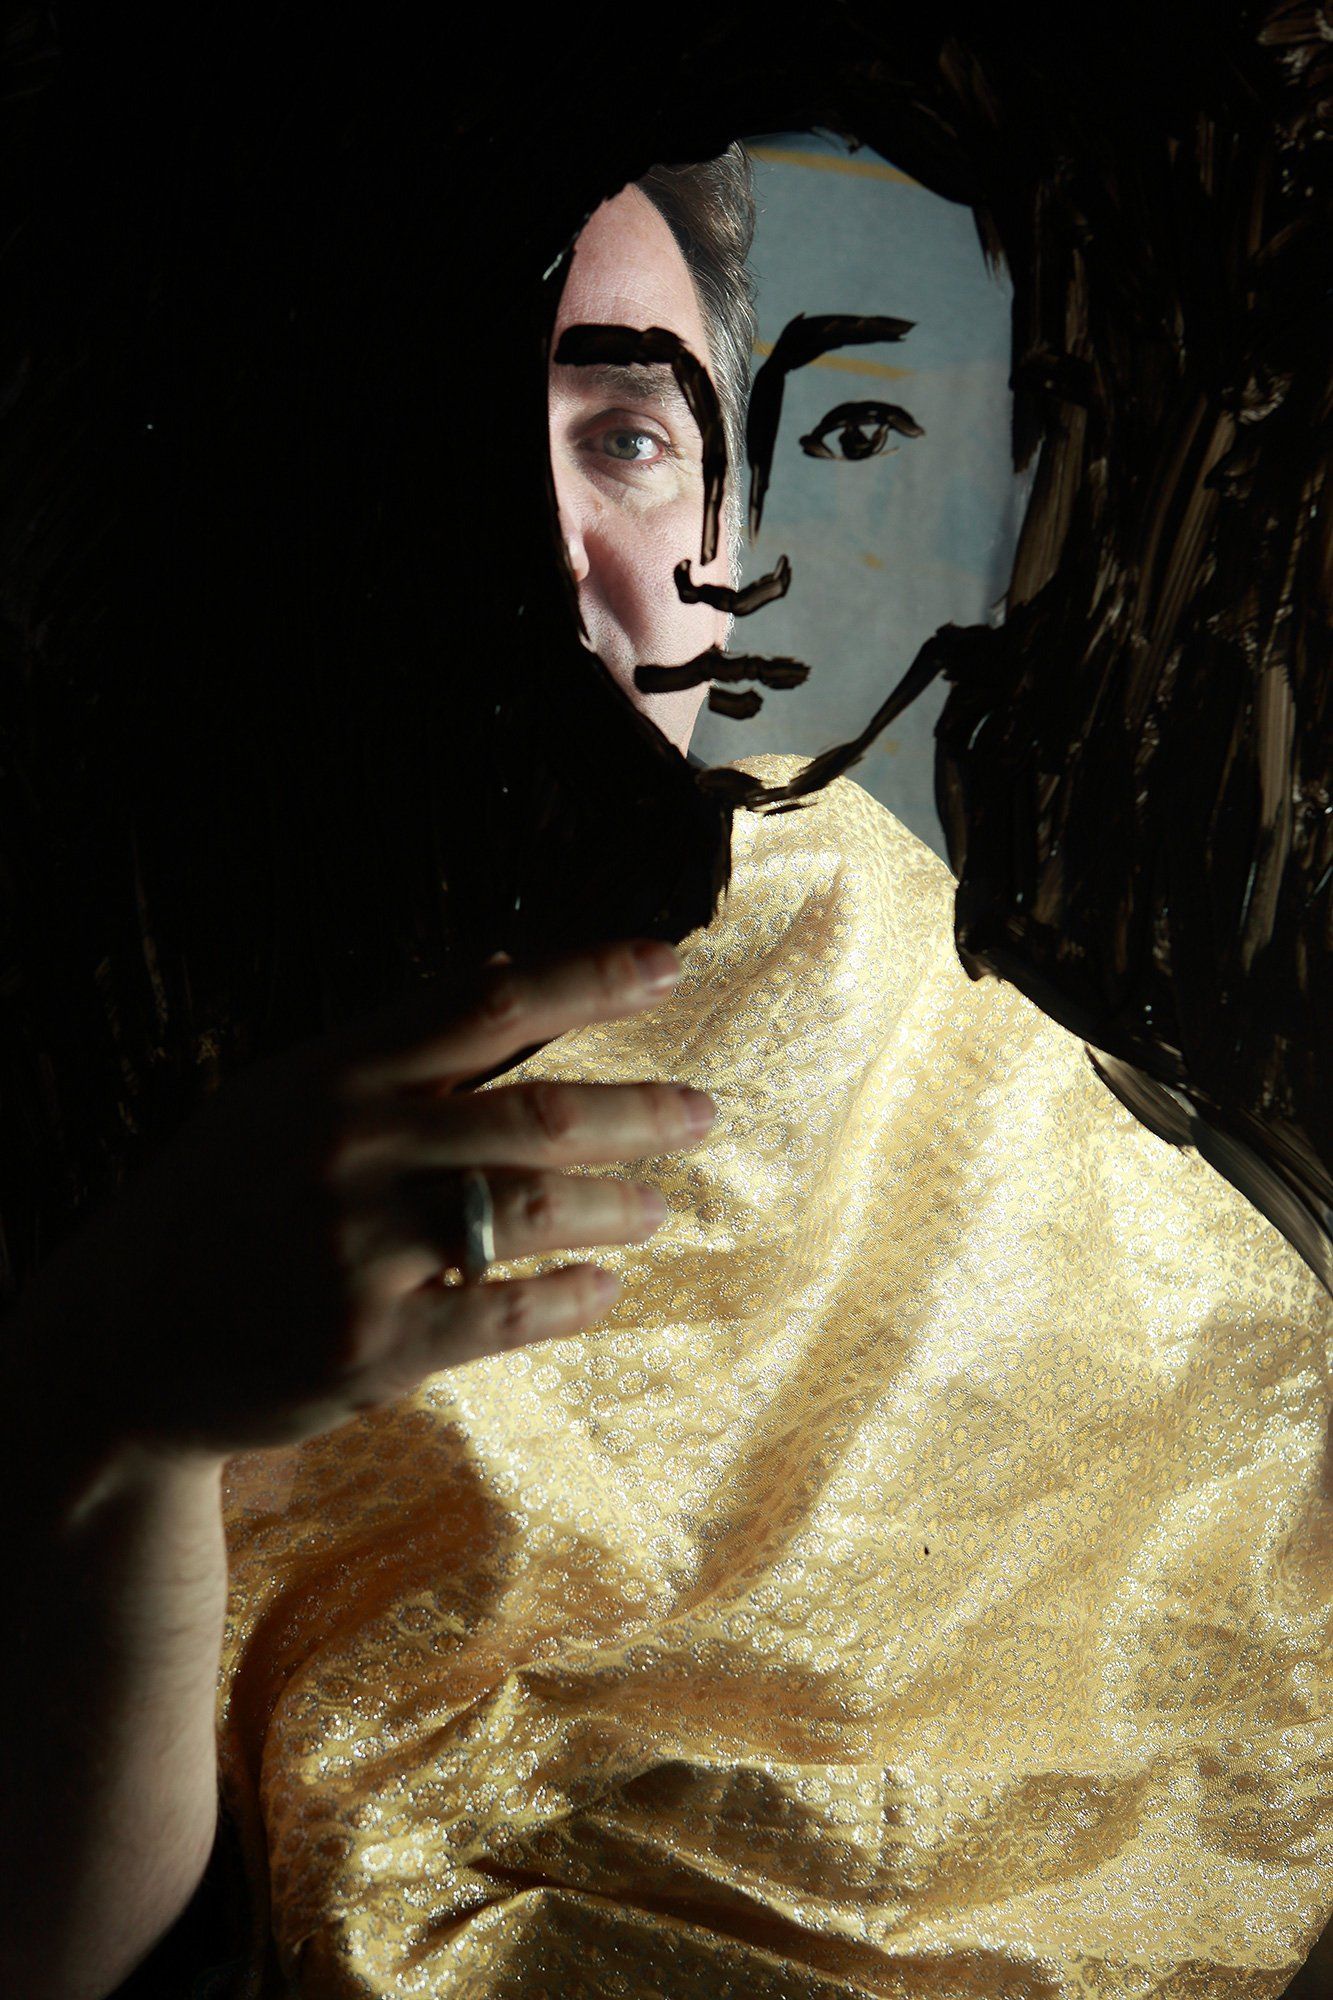 „Face in Face No. 3“ by Sebastian Bieniek (B1EN1EK), 2016. Edition of 9 original photographs. 100 cm. x 67 cm. From „Face in Face“ series. Model: Dee Bee Smith. Oeuvre of BieniekFace (Bieniek-Face).